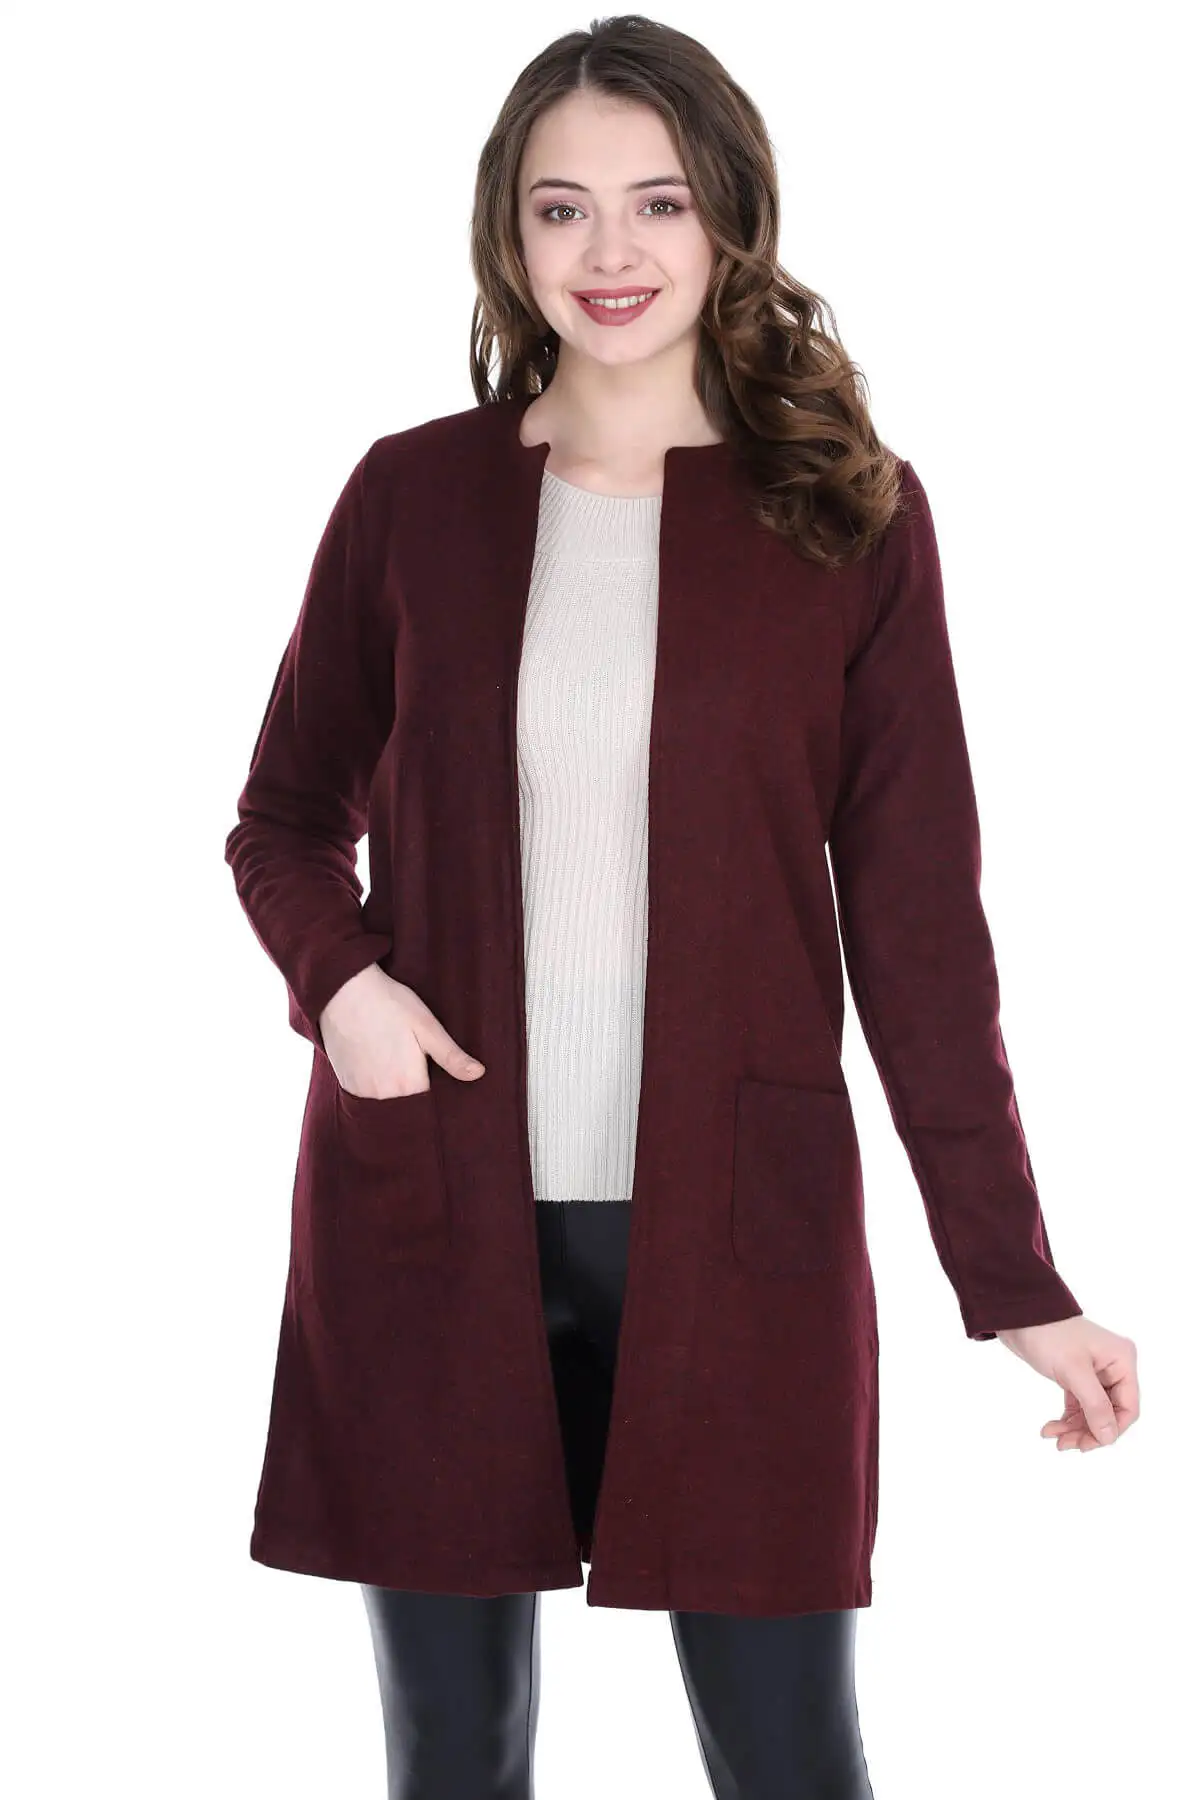 

2021 Women Coat Parka Woven Jacket Stylish Clothing Khaki Maroon Tan Grey Color New Collection Casual Wear Autumn Winter